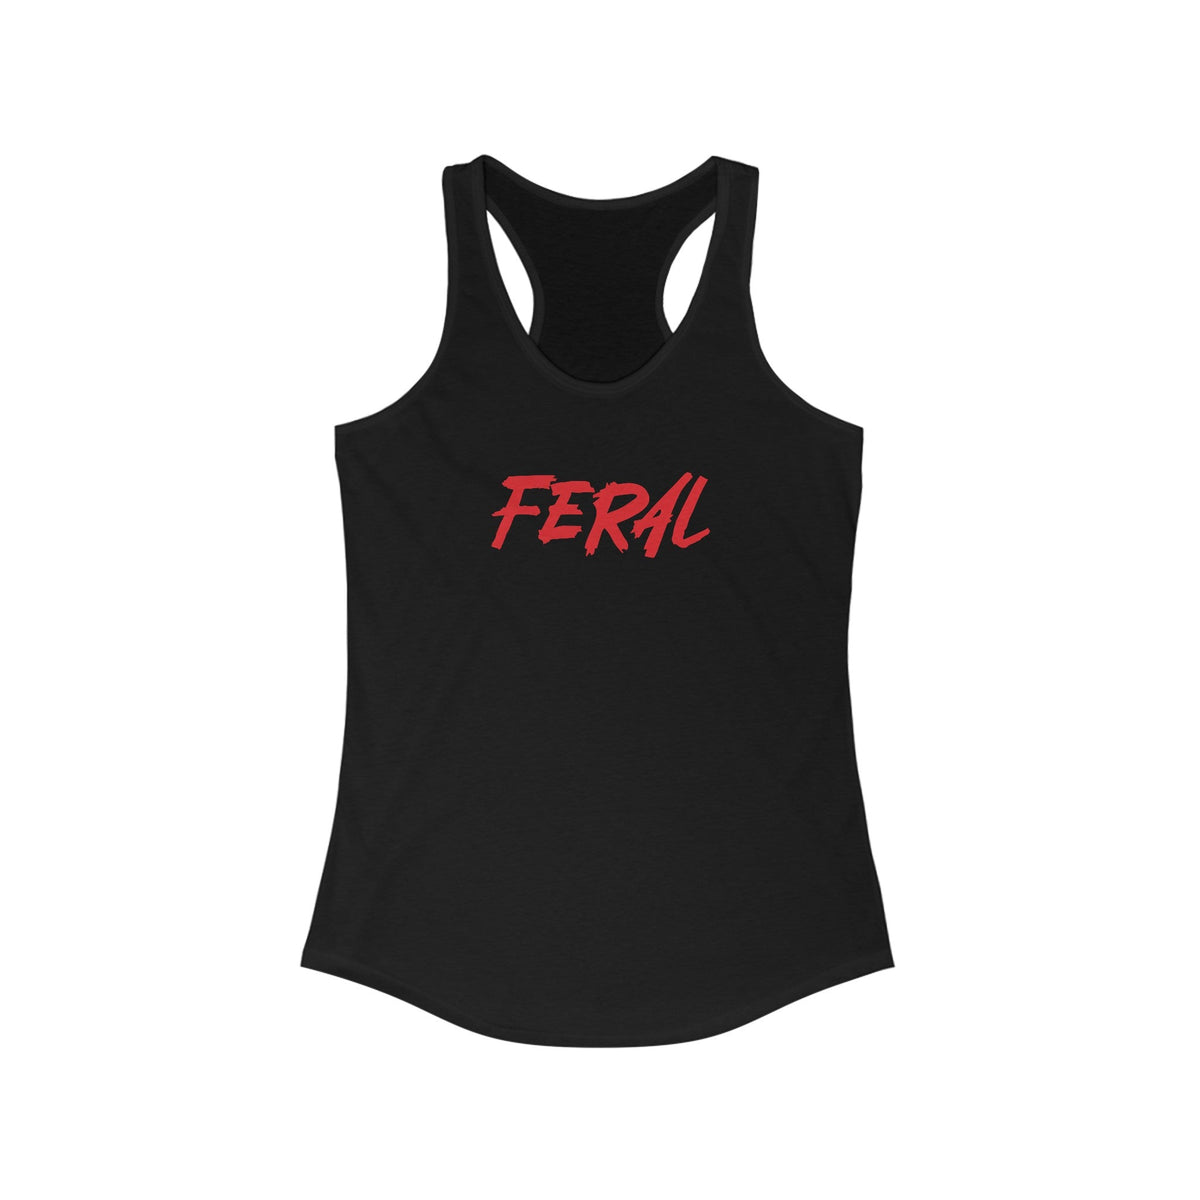 Feral Women's Racerback Tank - Goth Cloth Co.Tank Top16934558935502645026